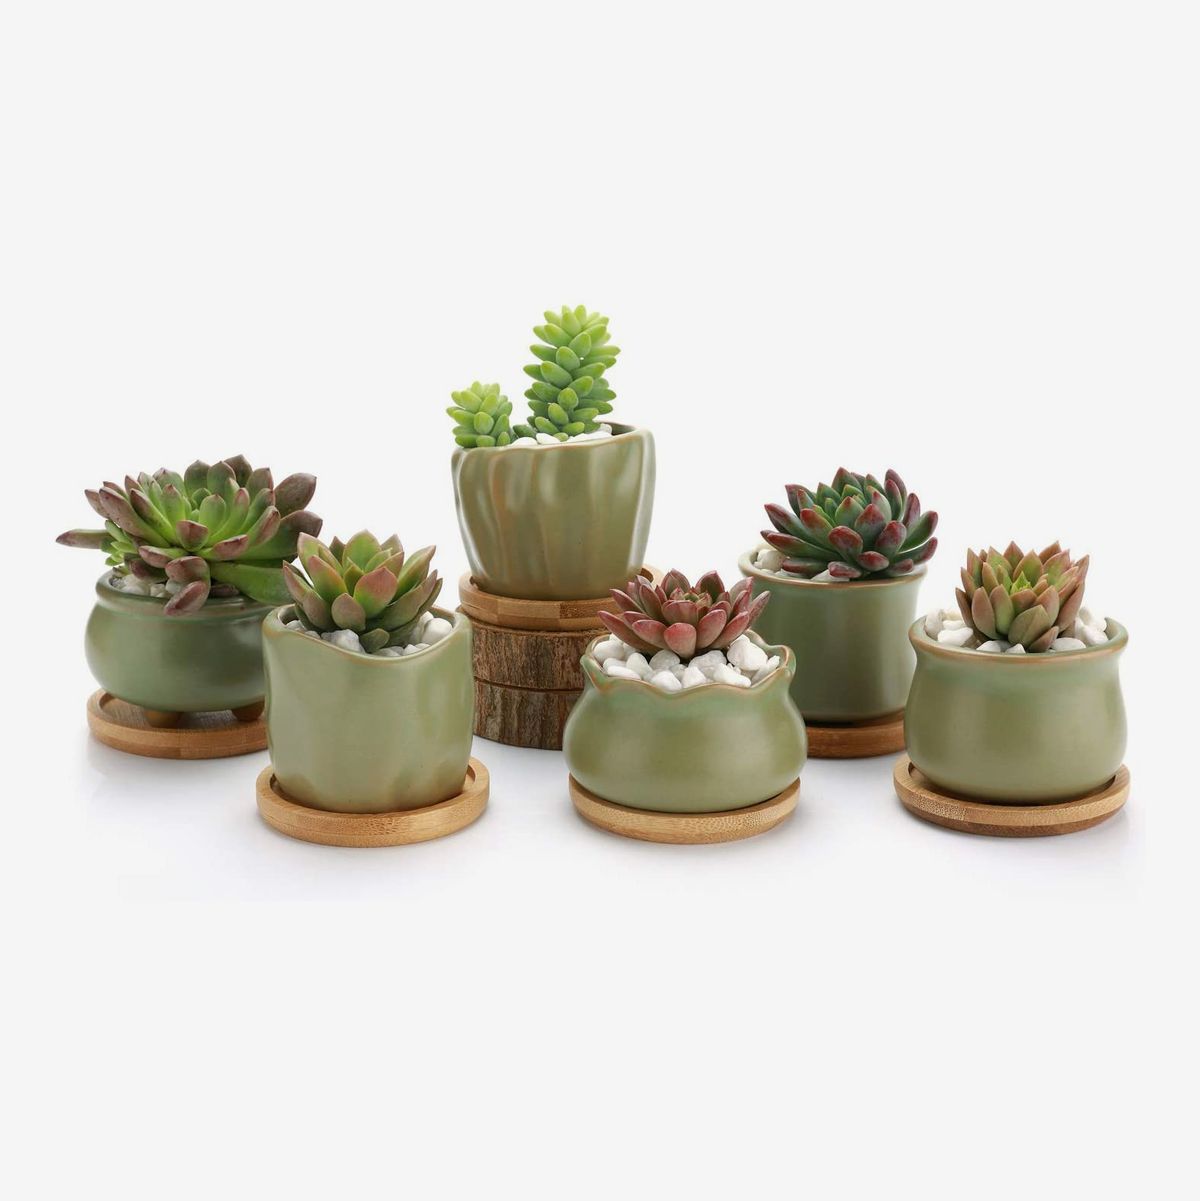 2x/set Ceramic Succulent Planter Pot Small Cactus Plant Pot Container 